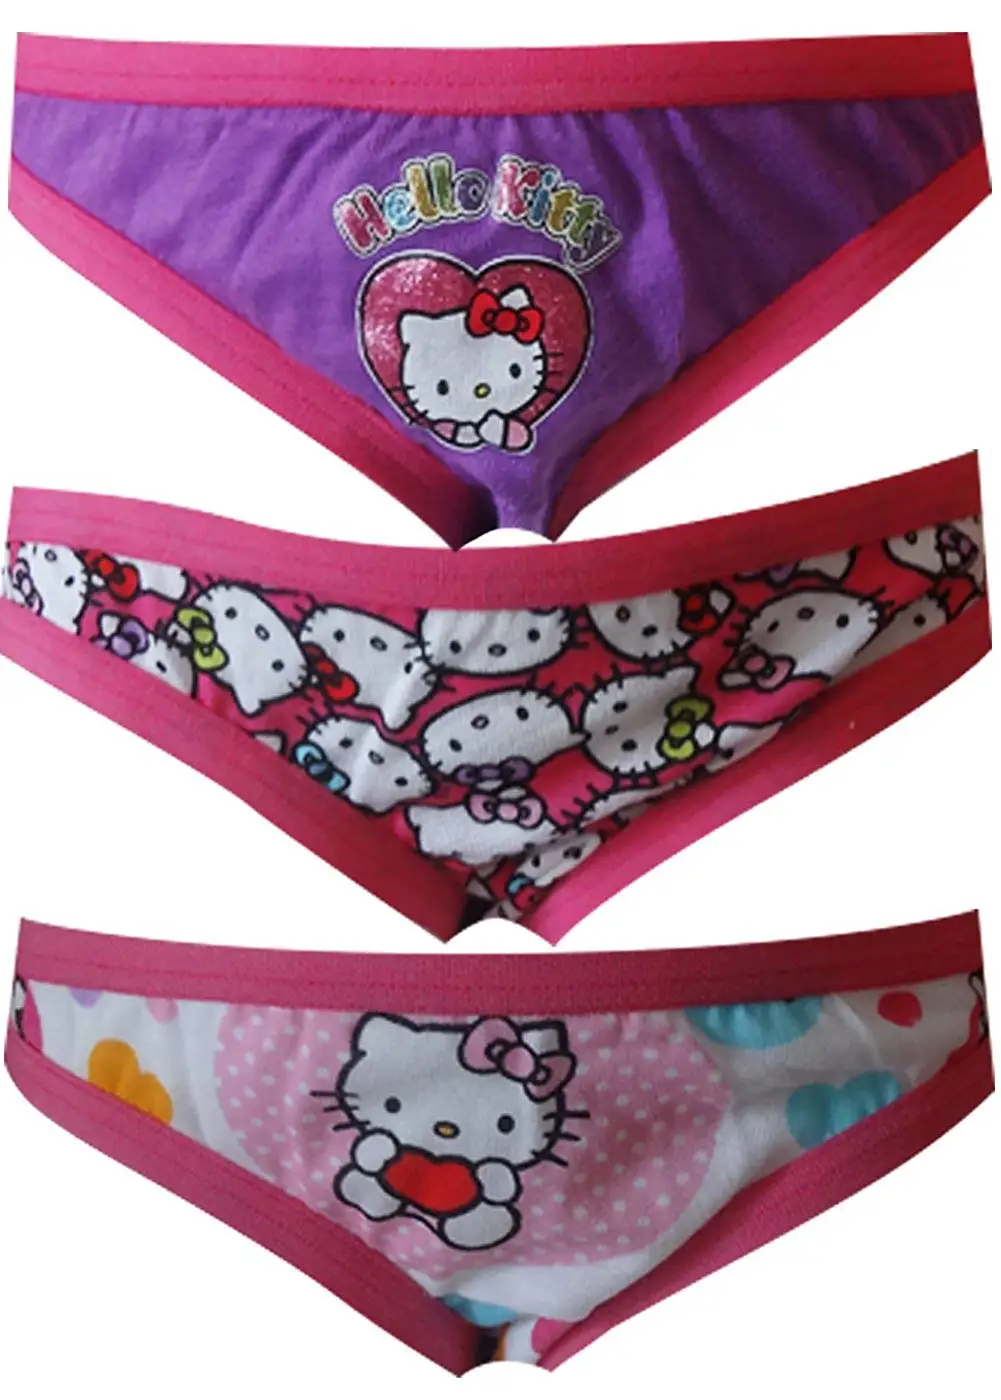 Cheap Adult Hello Kitty Panties Find Adult Hello Kitty Panties Deals